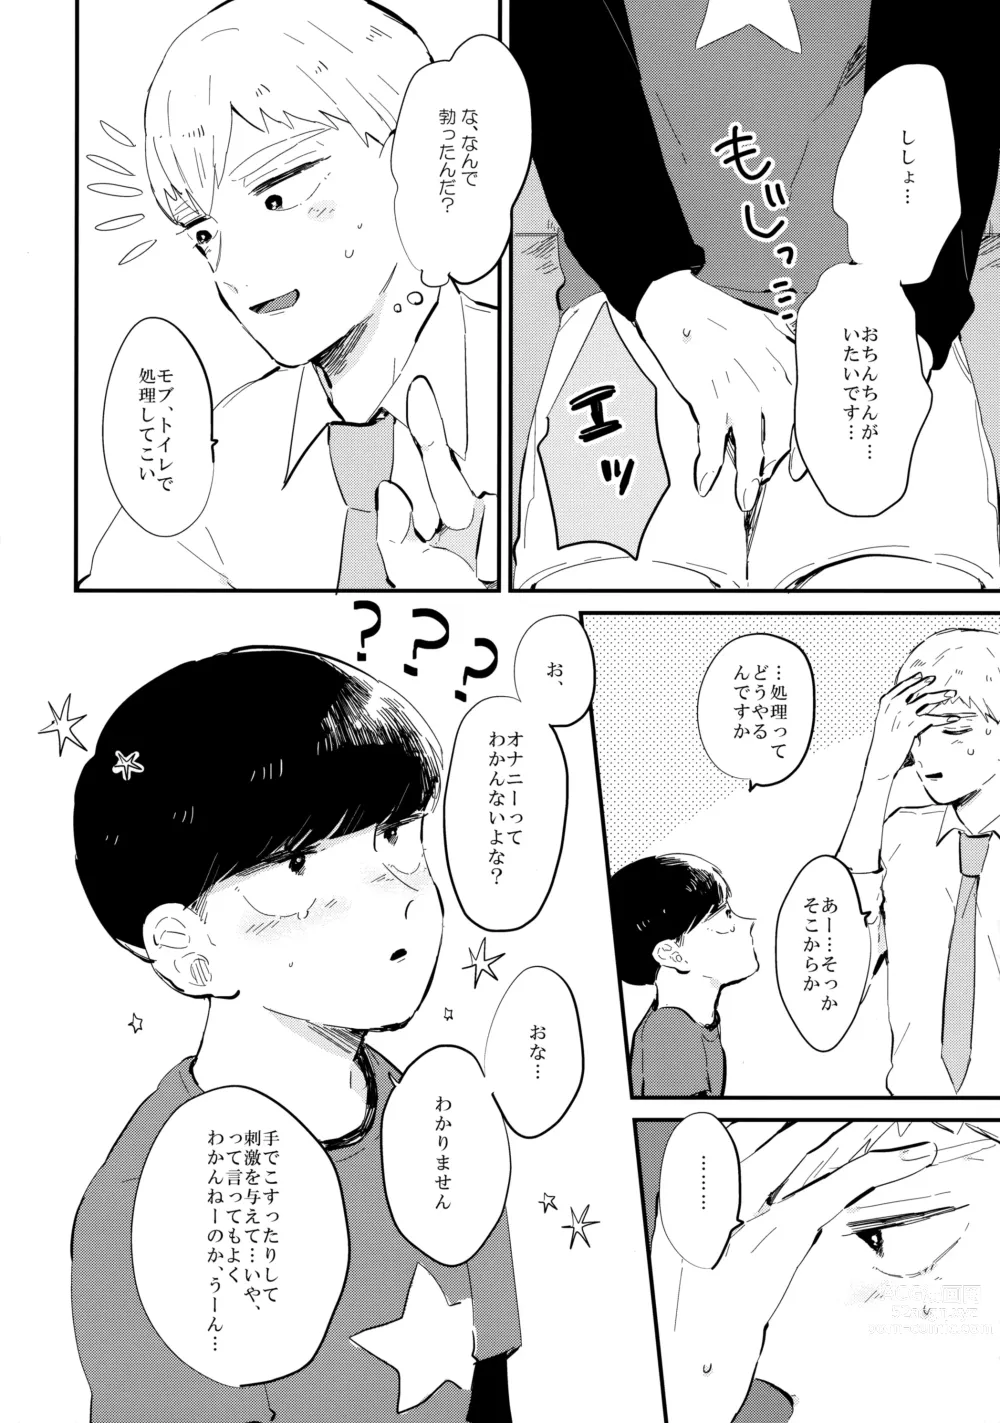 Page 9 of doujinshi Milky Boy, Oshiete Ageru.